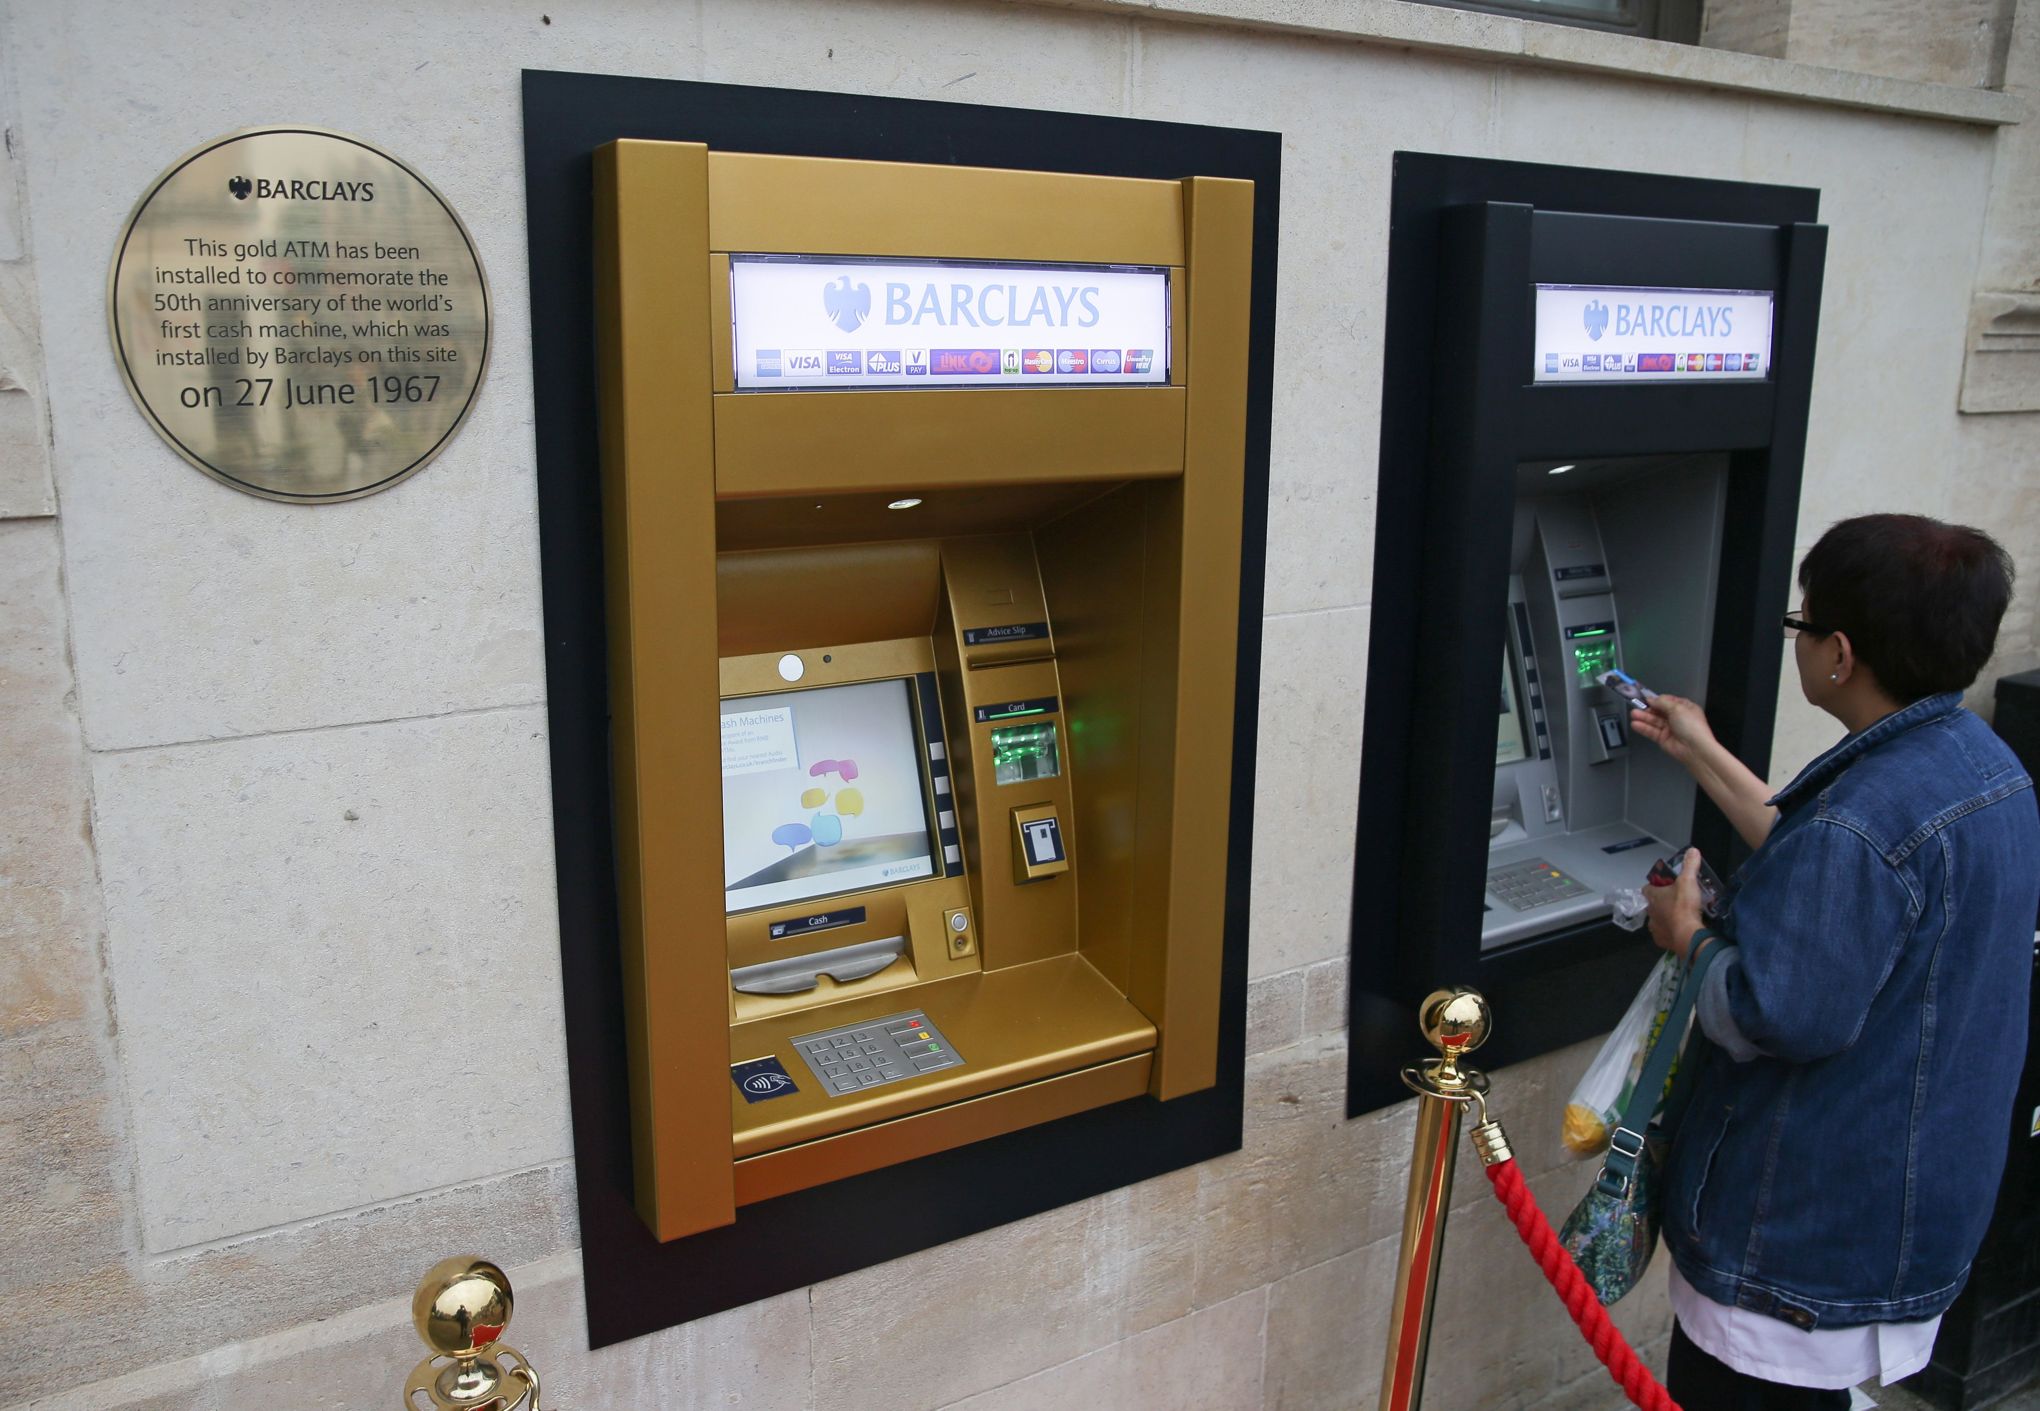 First atm. Банкомат. Банкомат (ATM). Первый Банкомат. Первый Банкомат в мире.